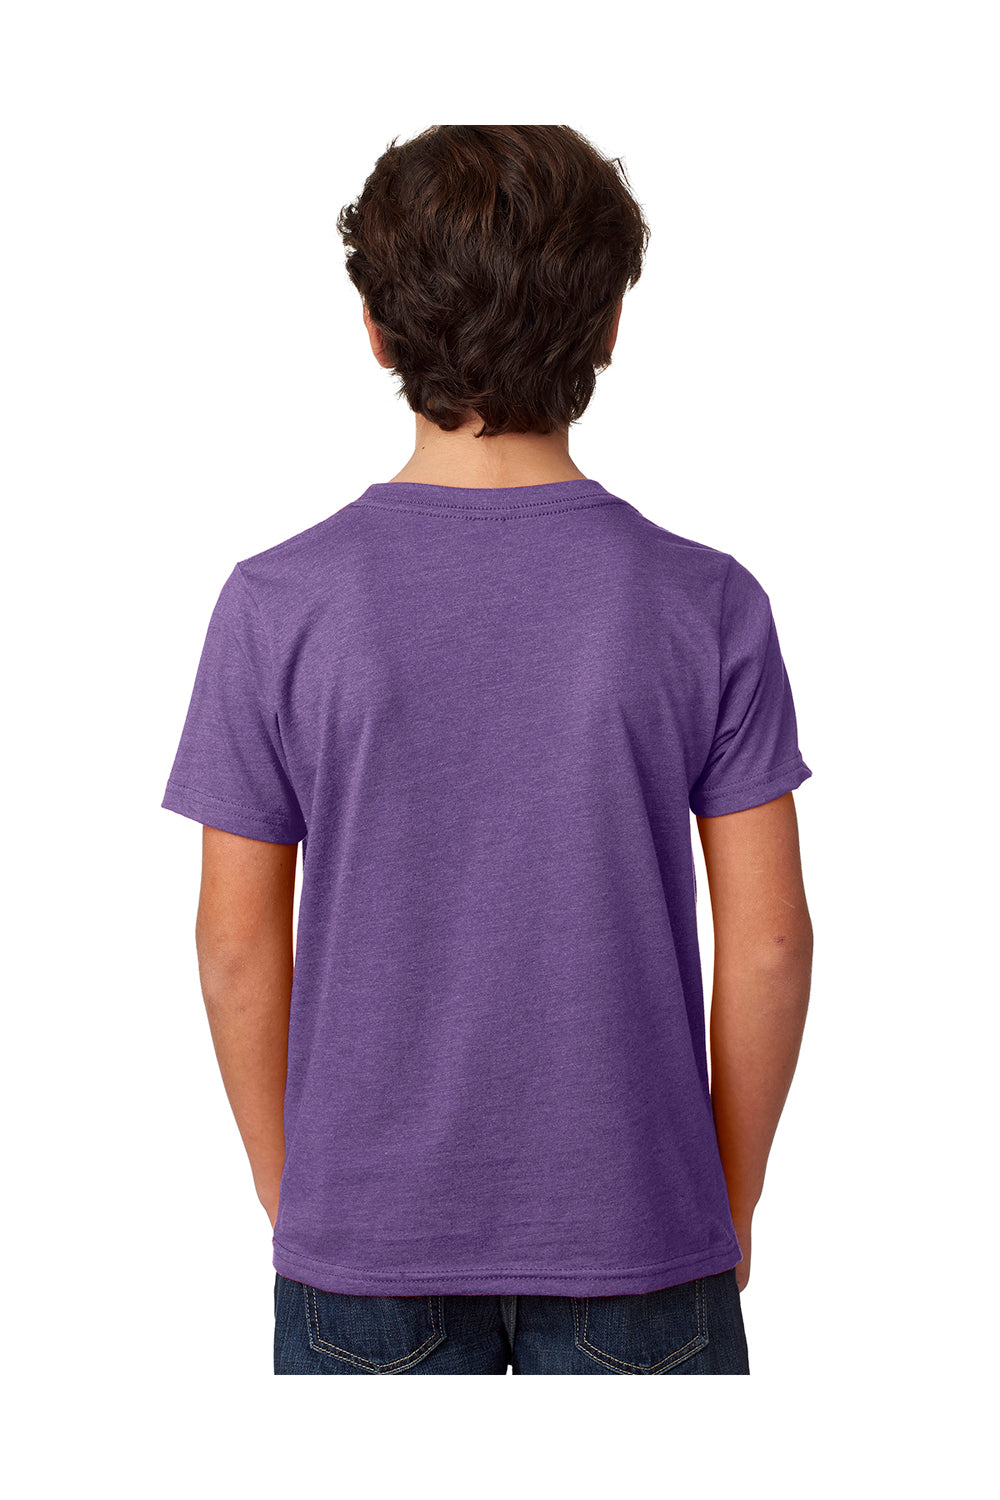 Next Level 3312 Youth CVC Jersey Short Sleeve Crewneck T-Shirt Purple Rush Back